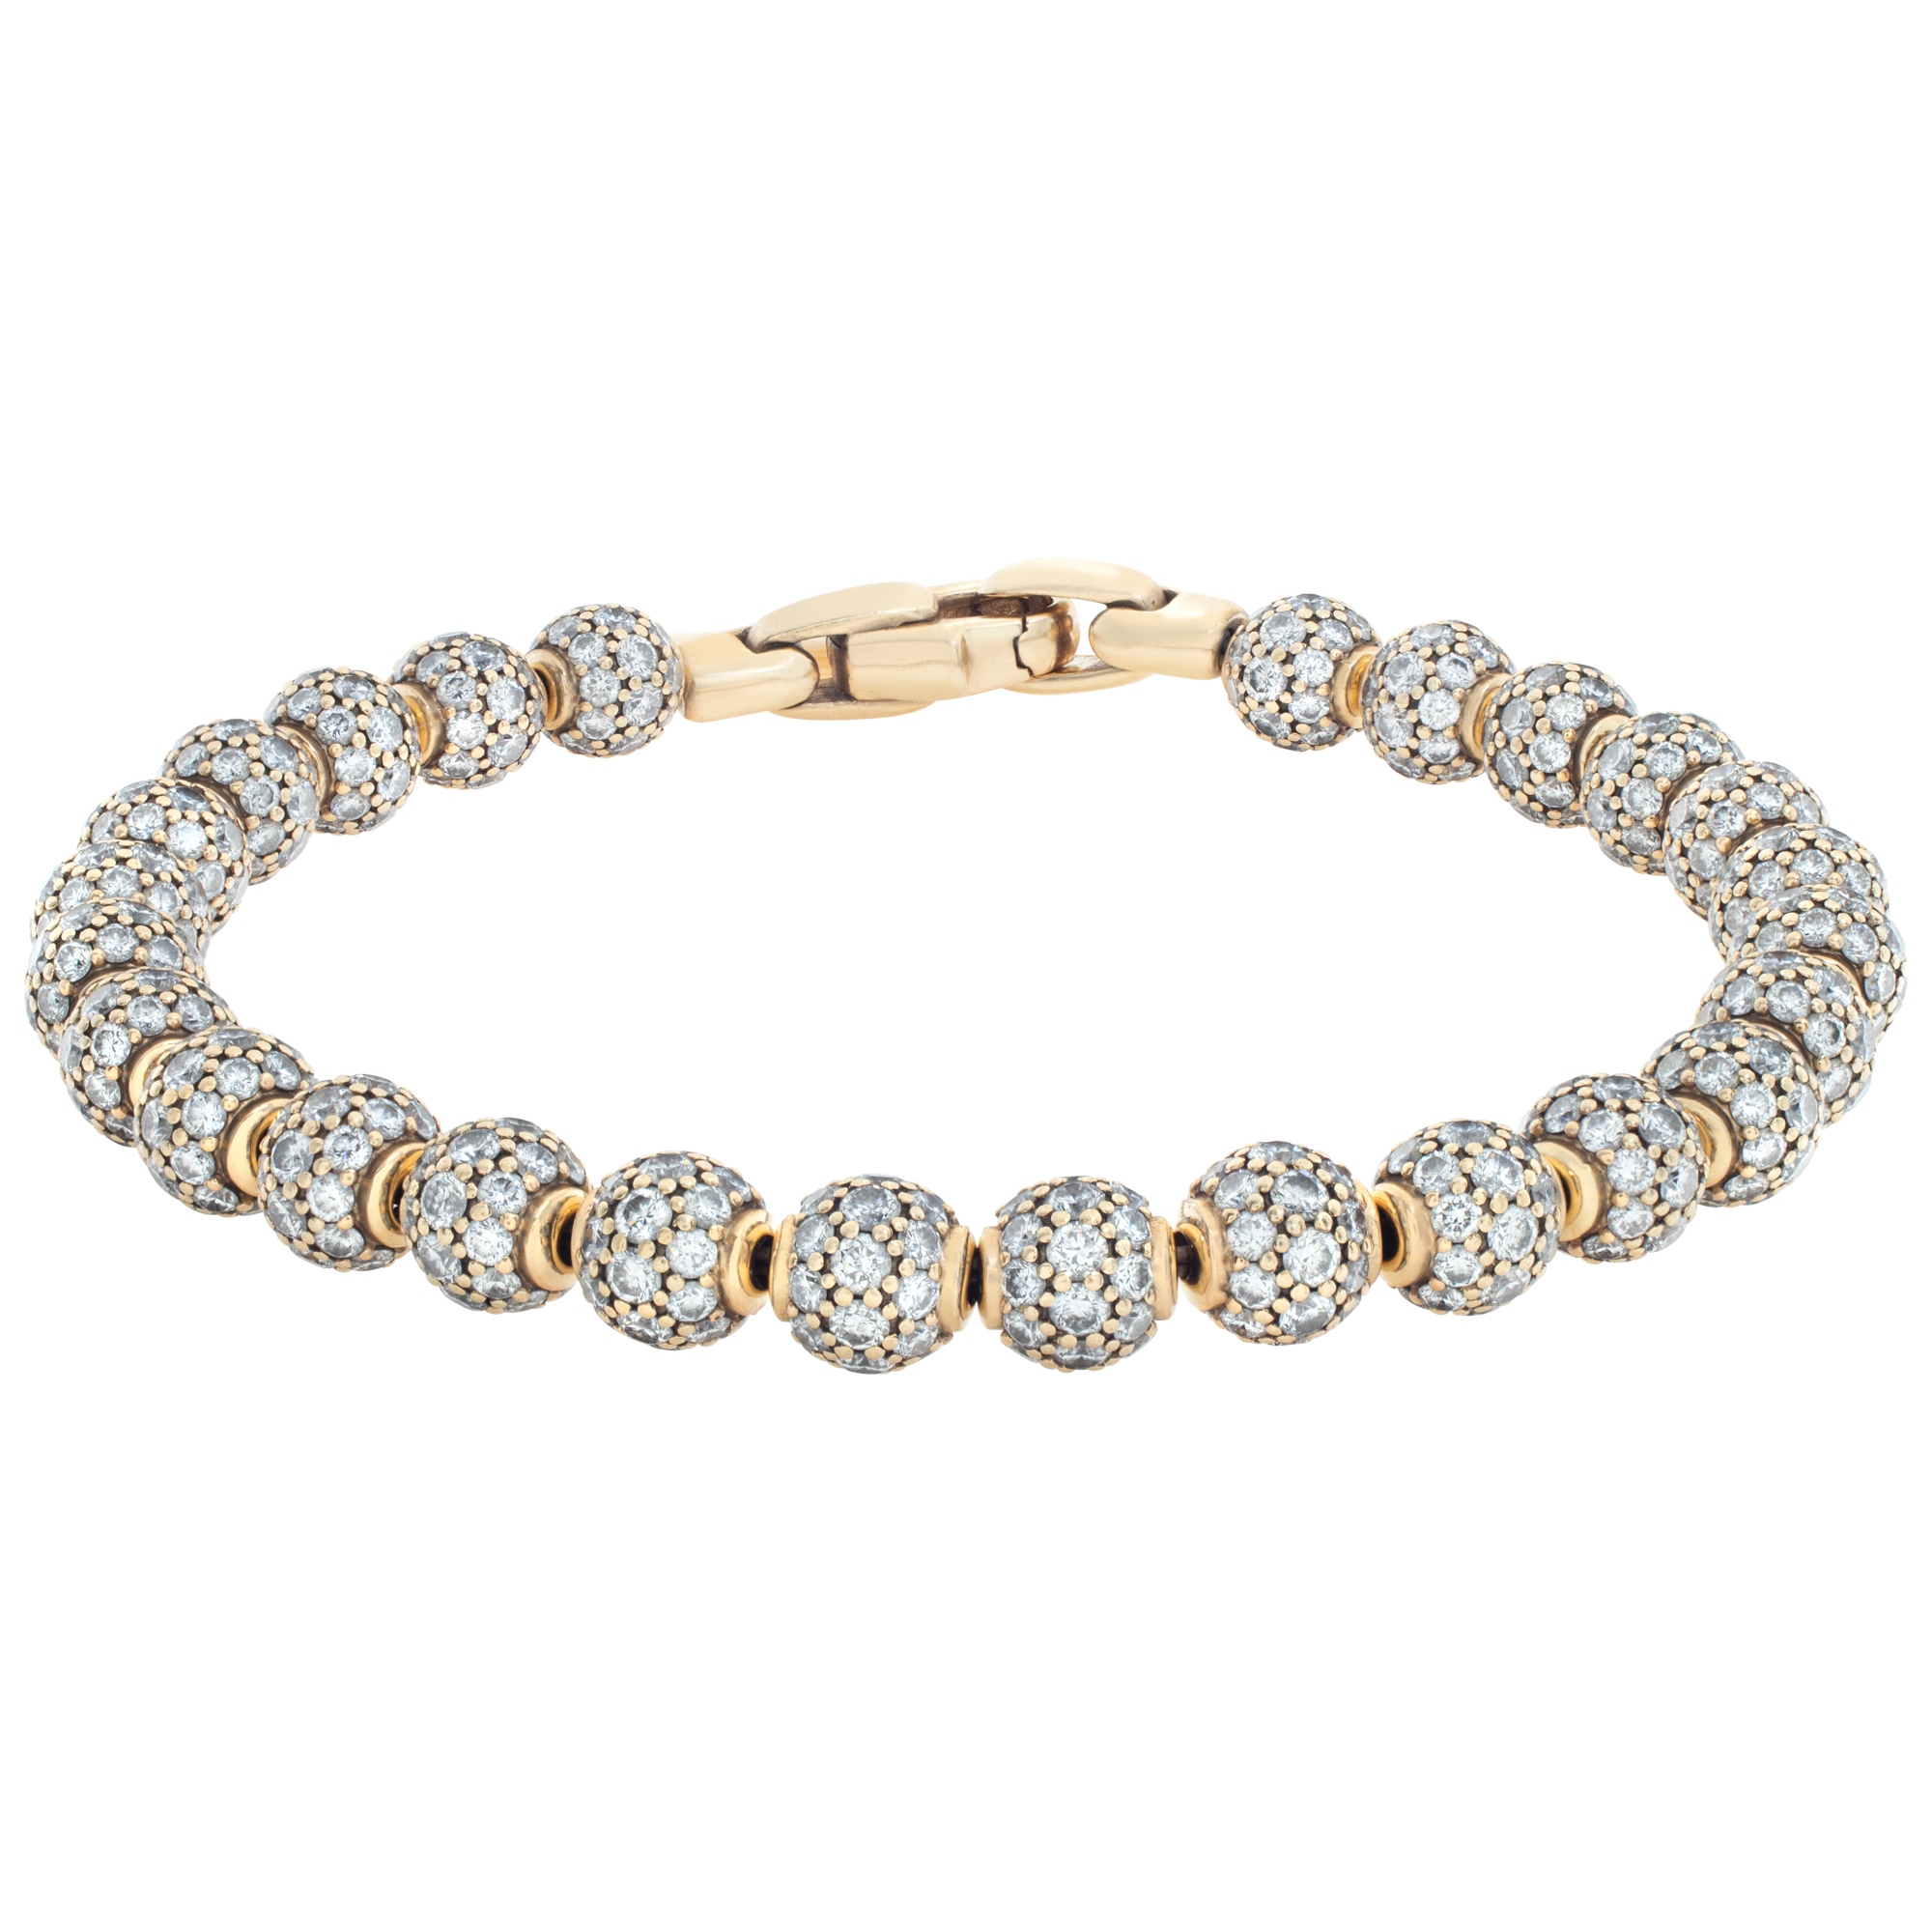 David Yurman Spiritual Bead pave diamond bracelet in 18K gold, with approx. 14.07 carats pave diamonds.